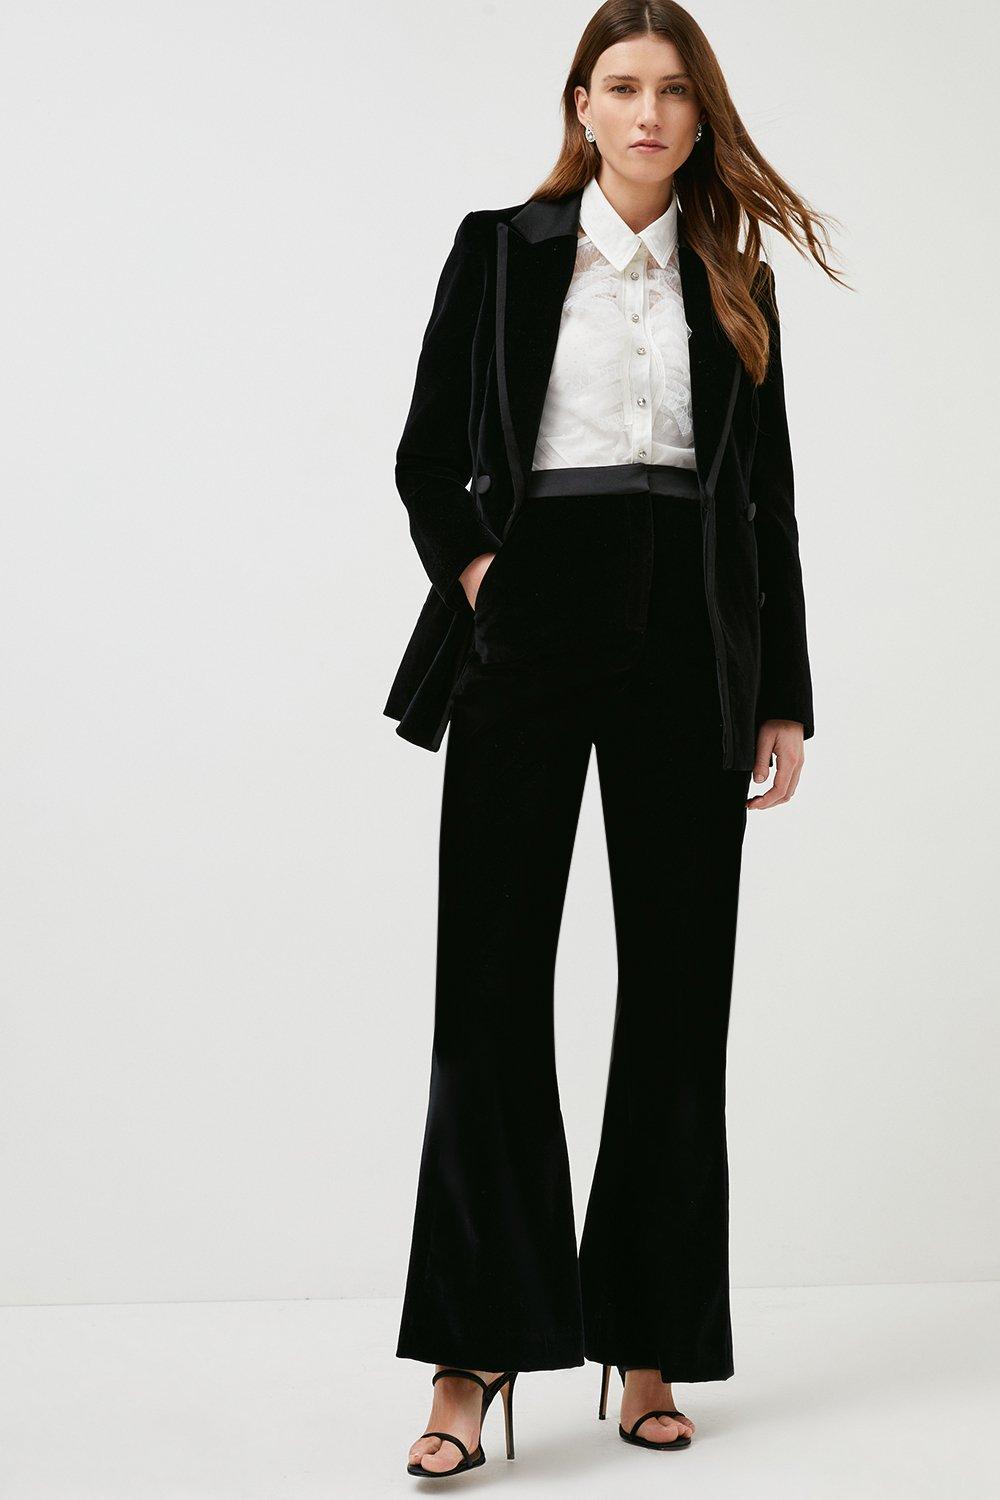 Suits For Women | Ladies Suits | White Suits for Women | Karen Millen